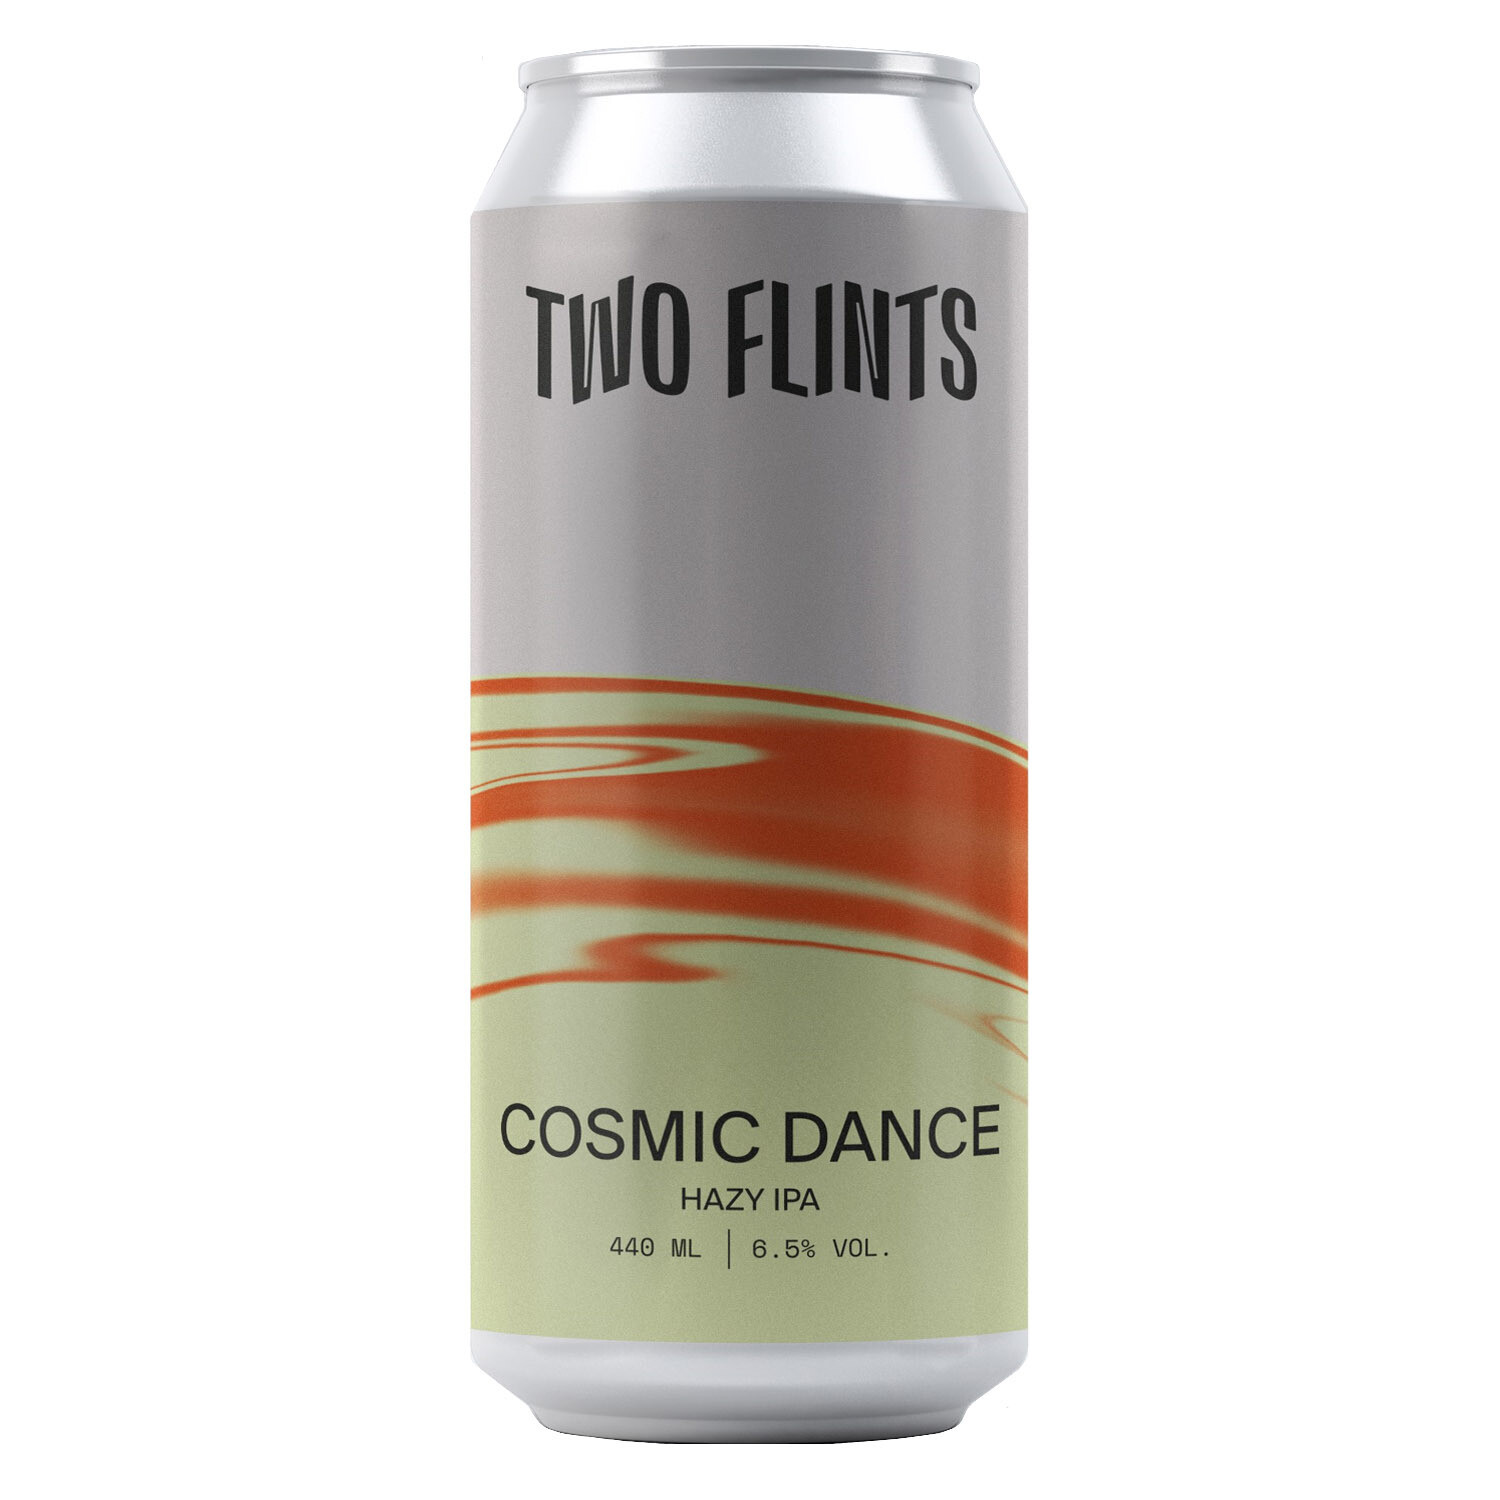 Two Flints Cosmic Dance Hazy IPA